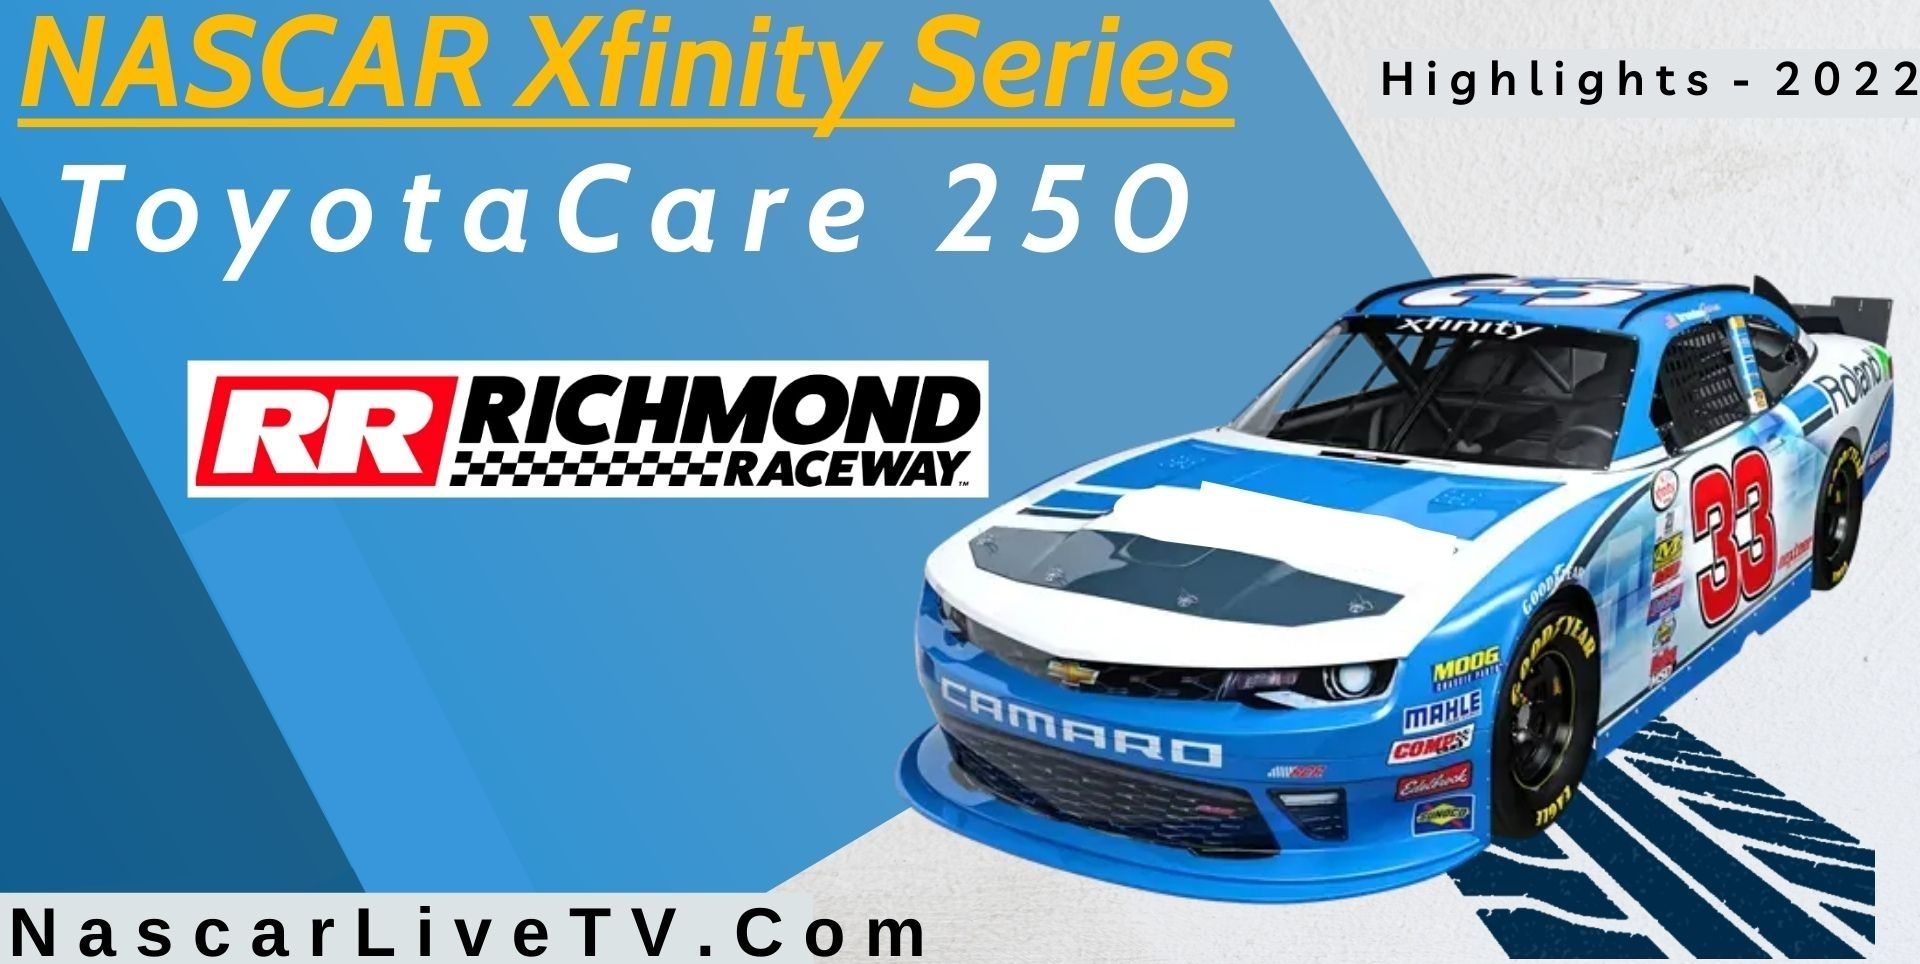 ToyotaCare 250 Highlights NASCAR Xfinity Series 2022